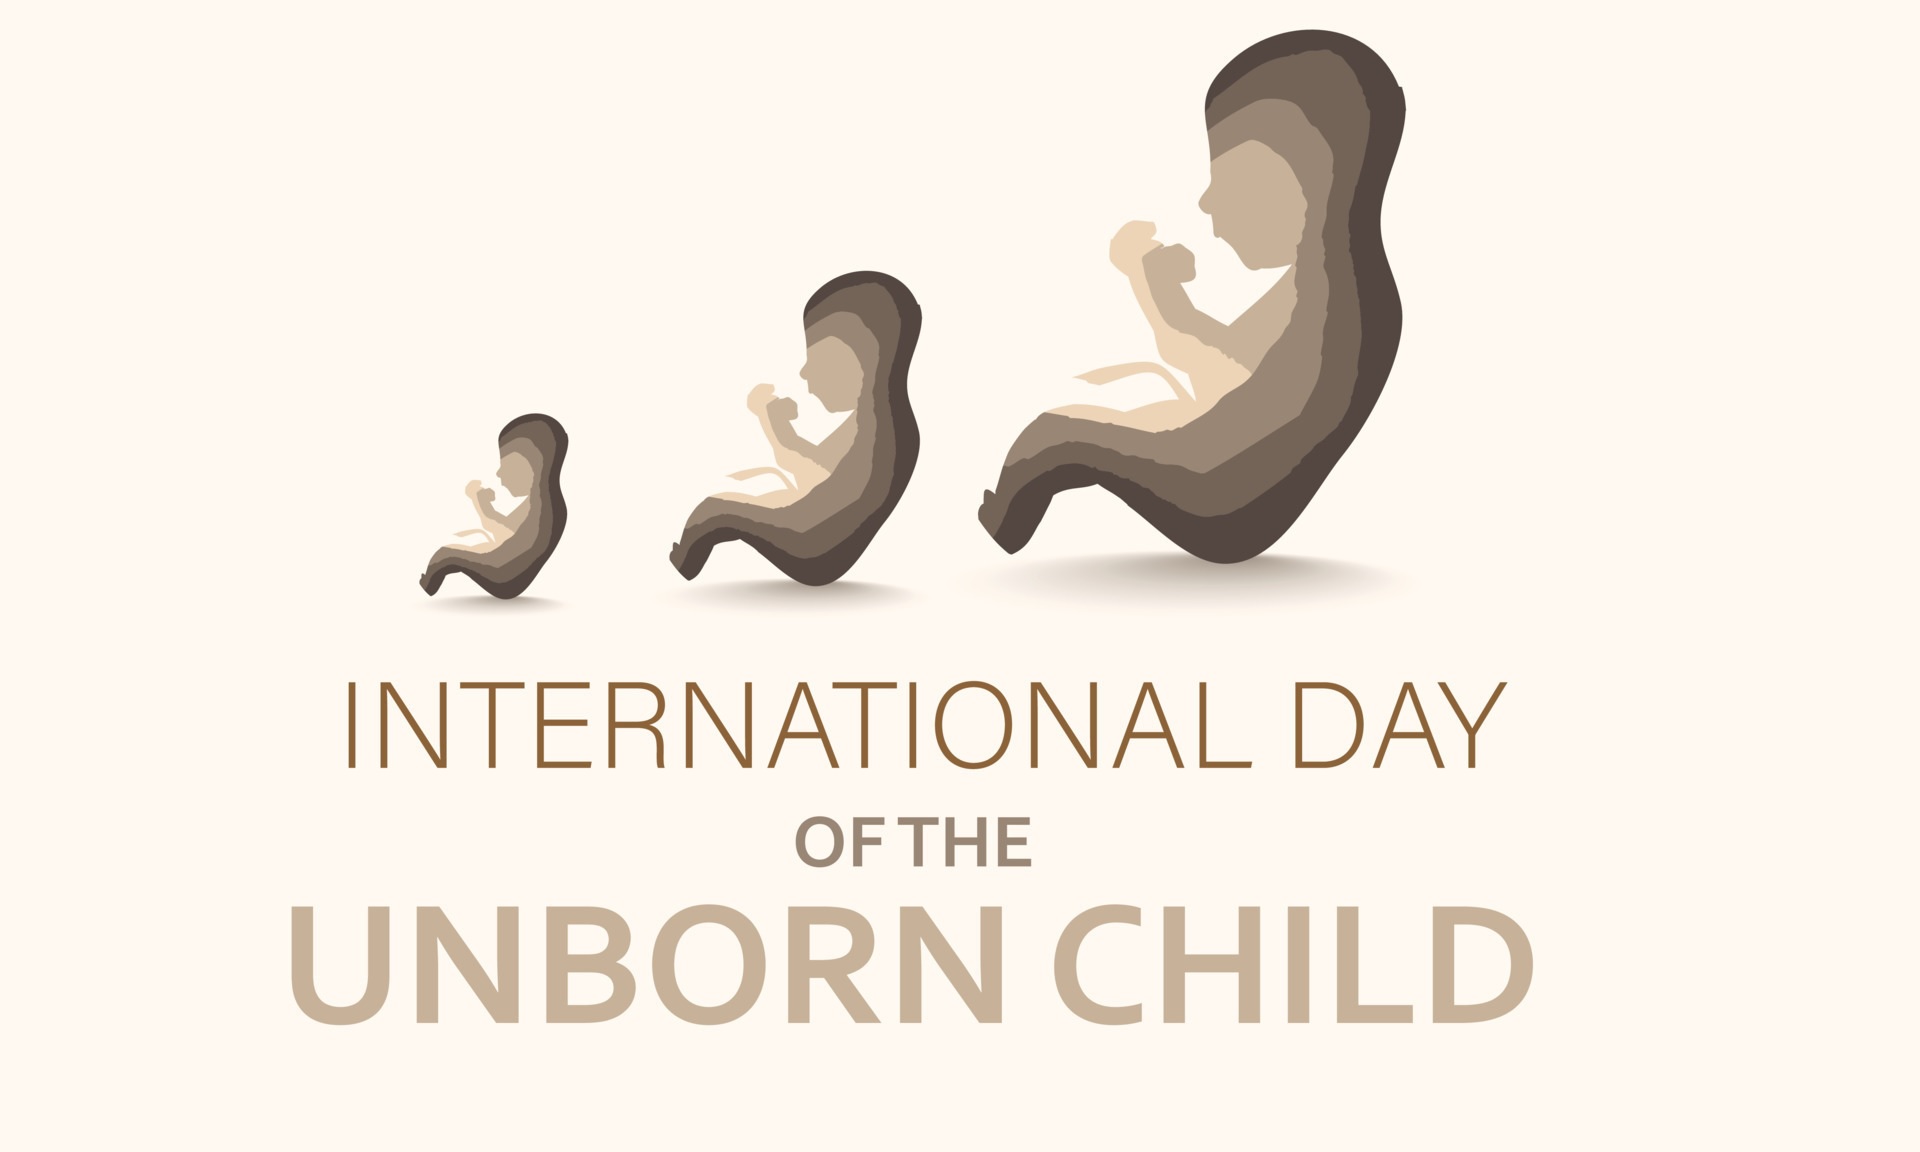 INTERNATIONAL DAY OF UNBORN CHILD IN TAMIL